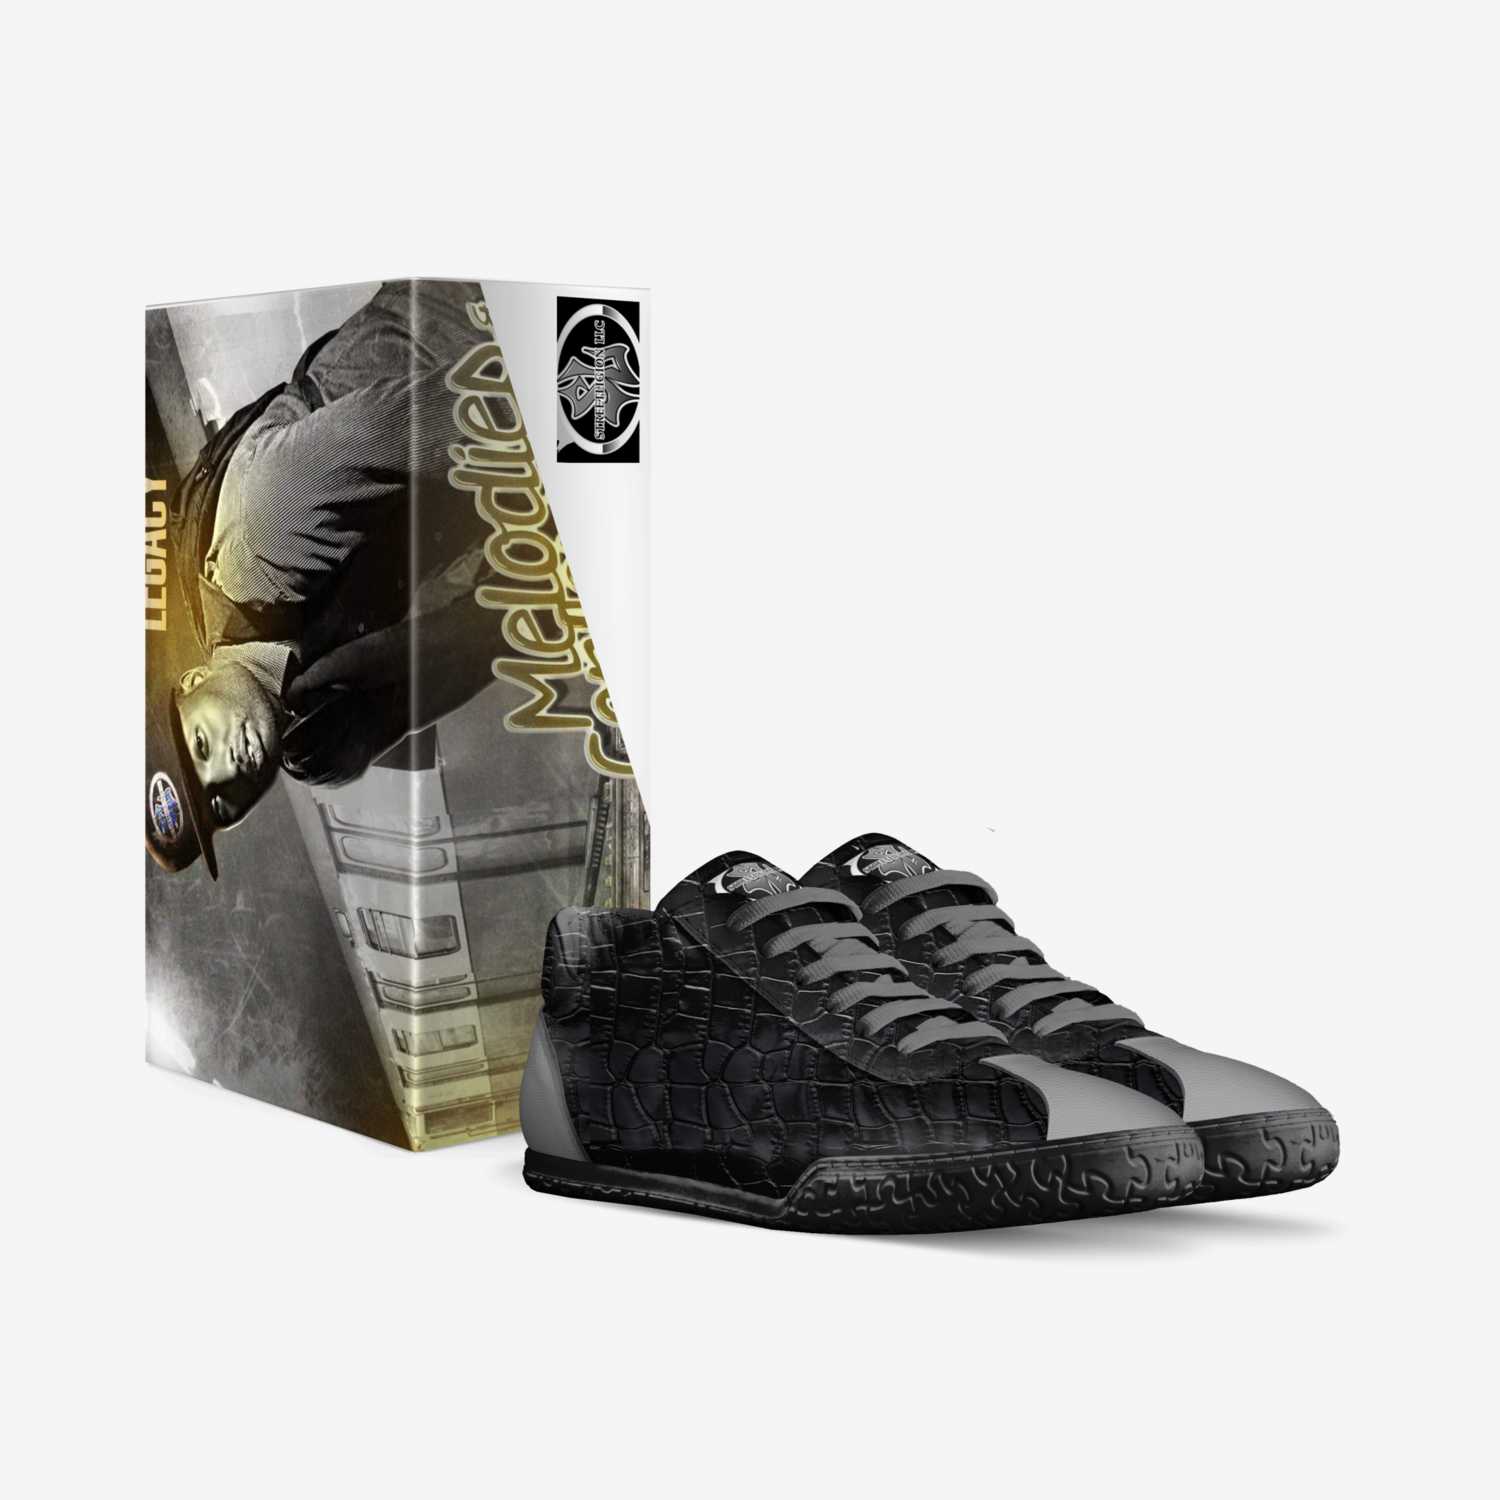 StreetligionNation custom made in Italy shoes by Cedric.bellamy84 Bellamy | Box view